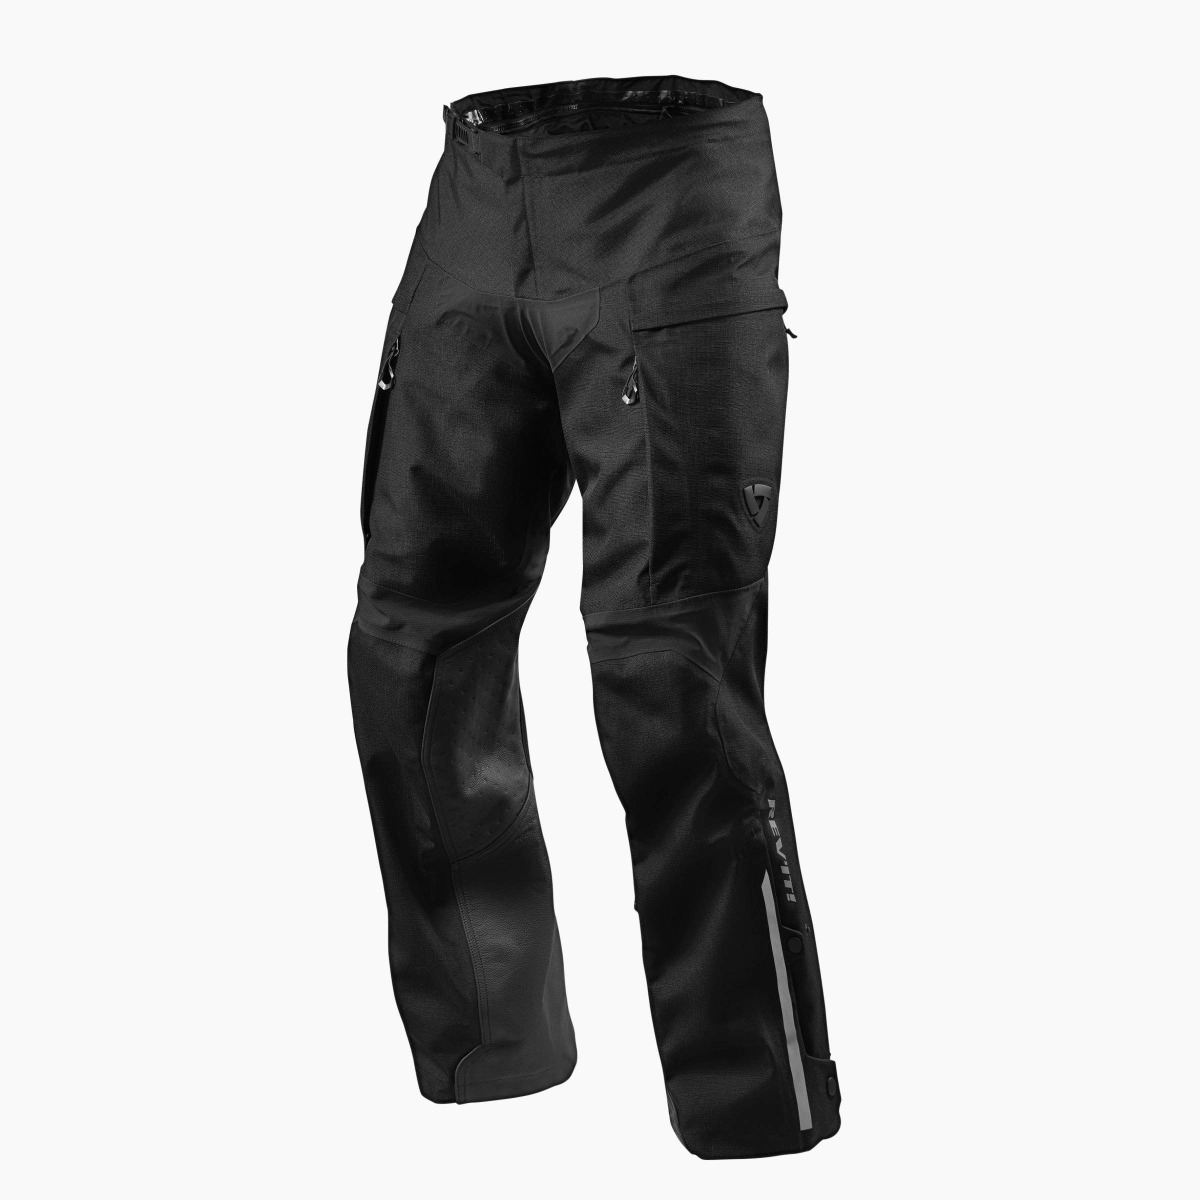 Image of REV'IT! Component H2O Short Black Motorcycle Pants Talla 2XL